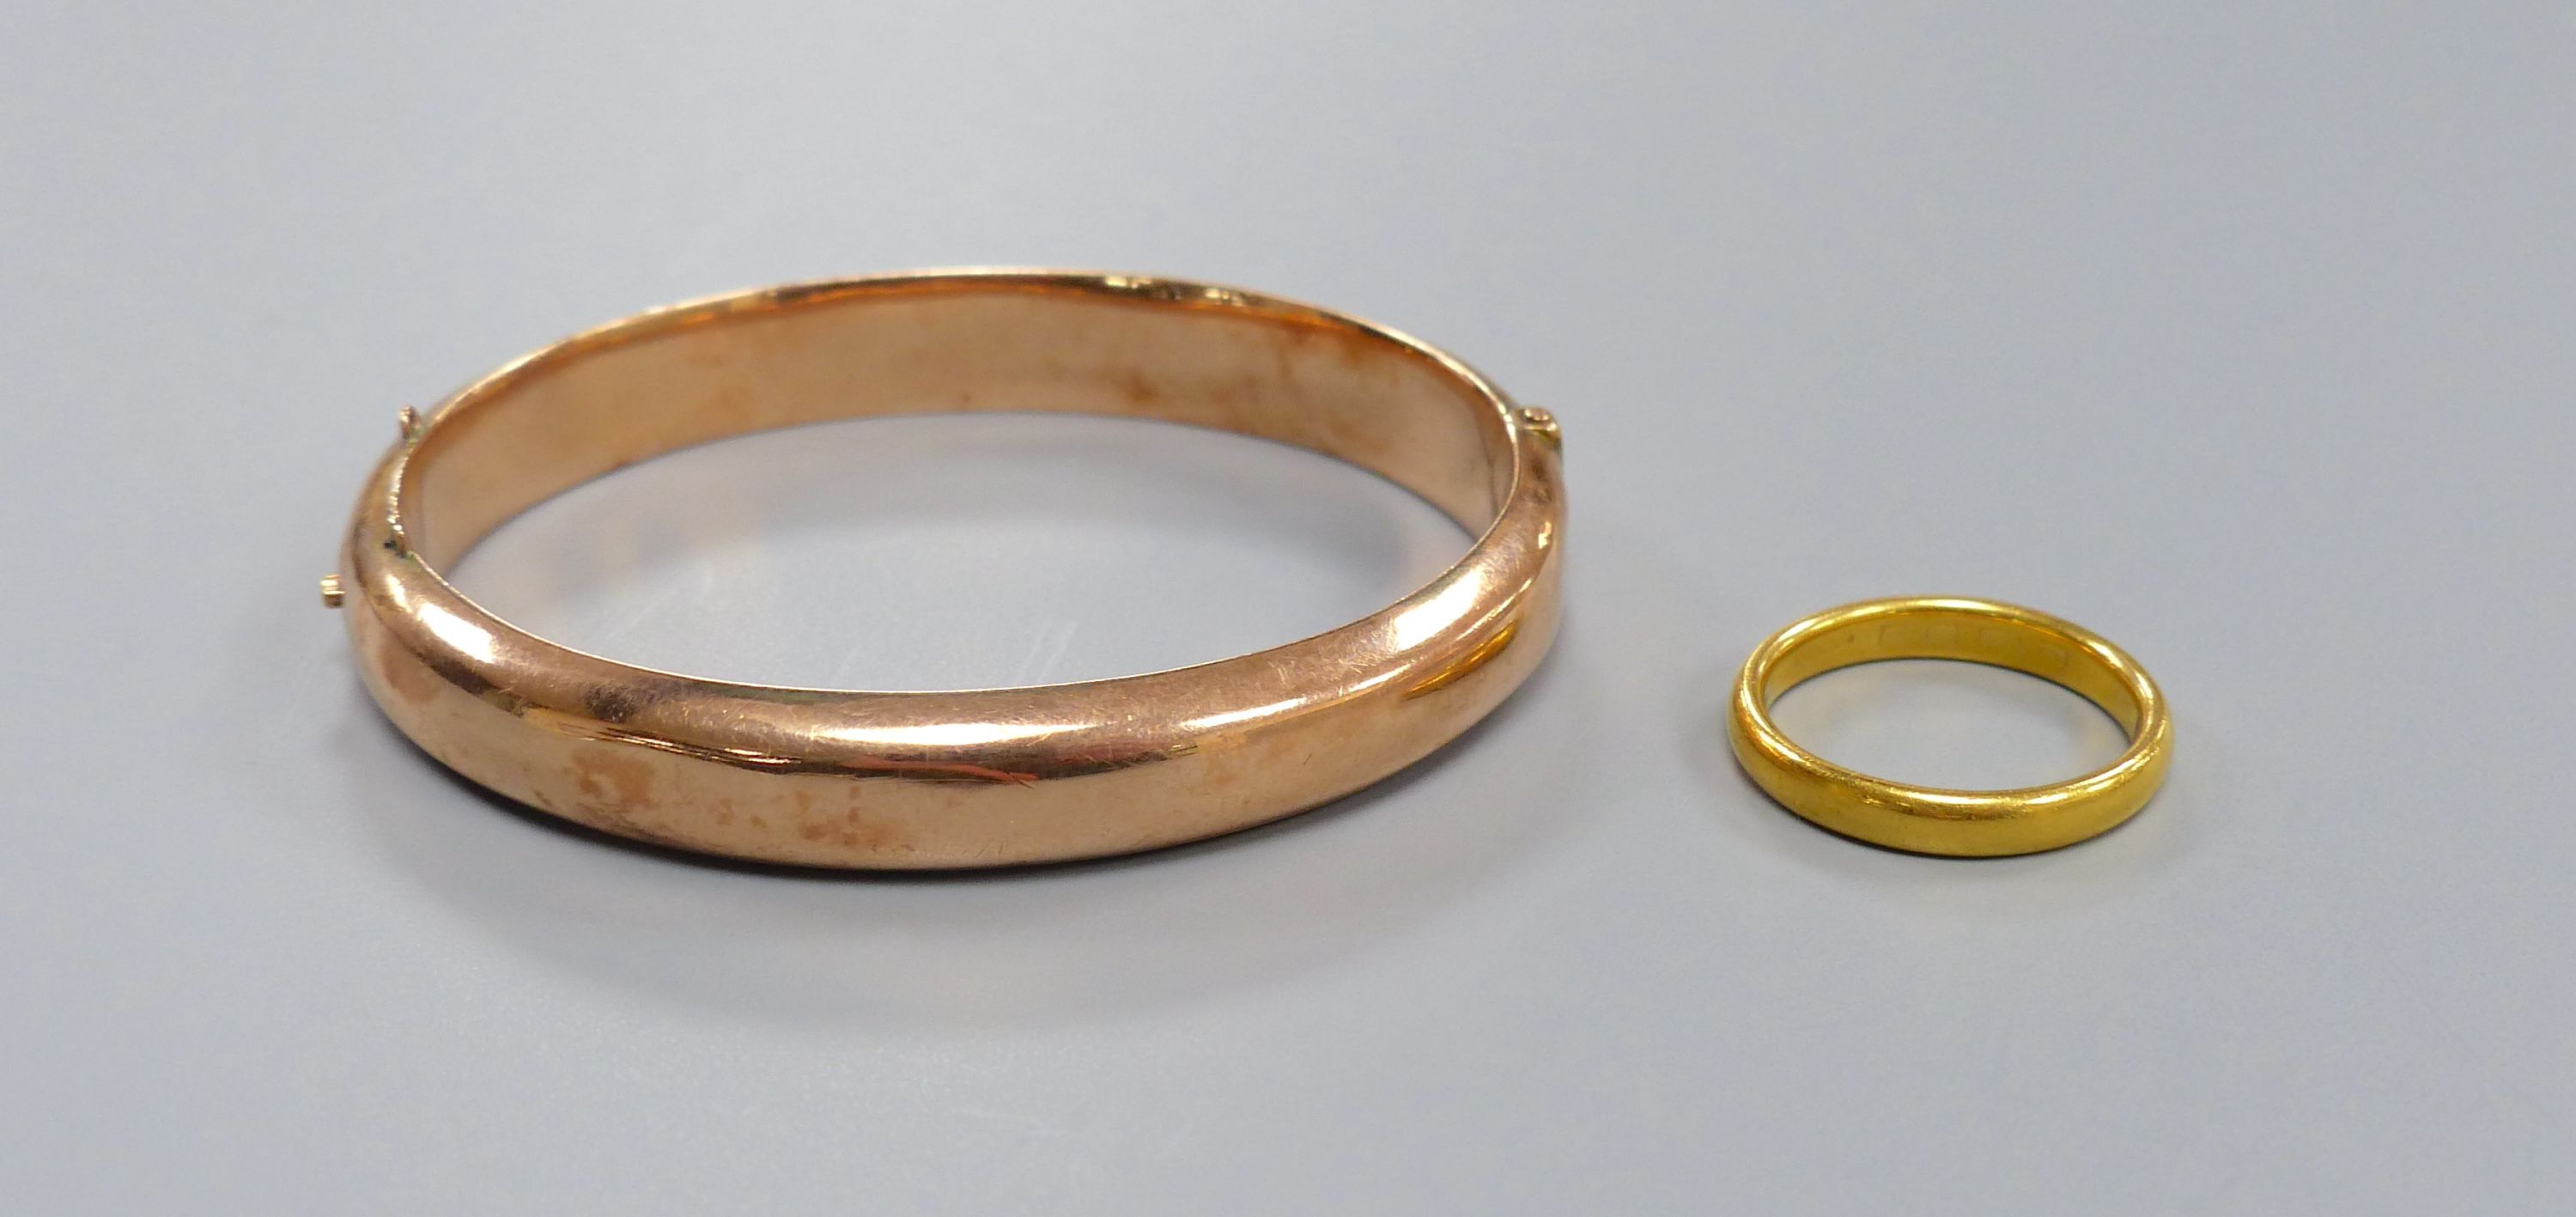 An 18ct gold wedding band, 6.1 grams and a 9ct gold hinged bangle, 12.3 grams.